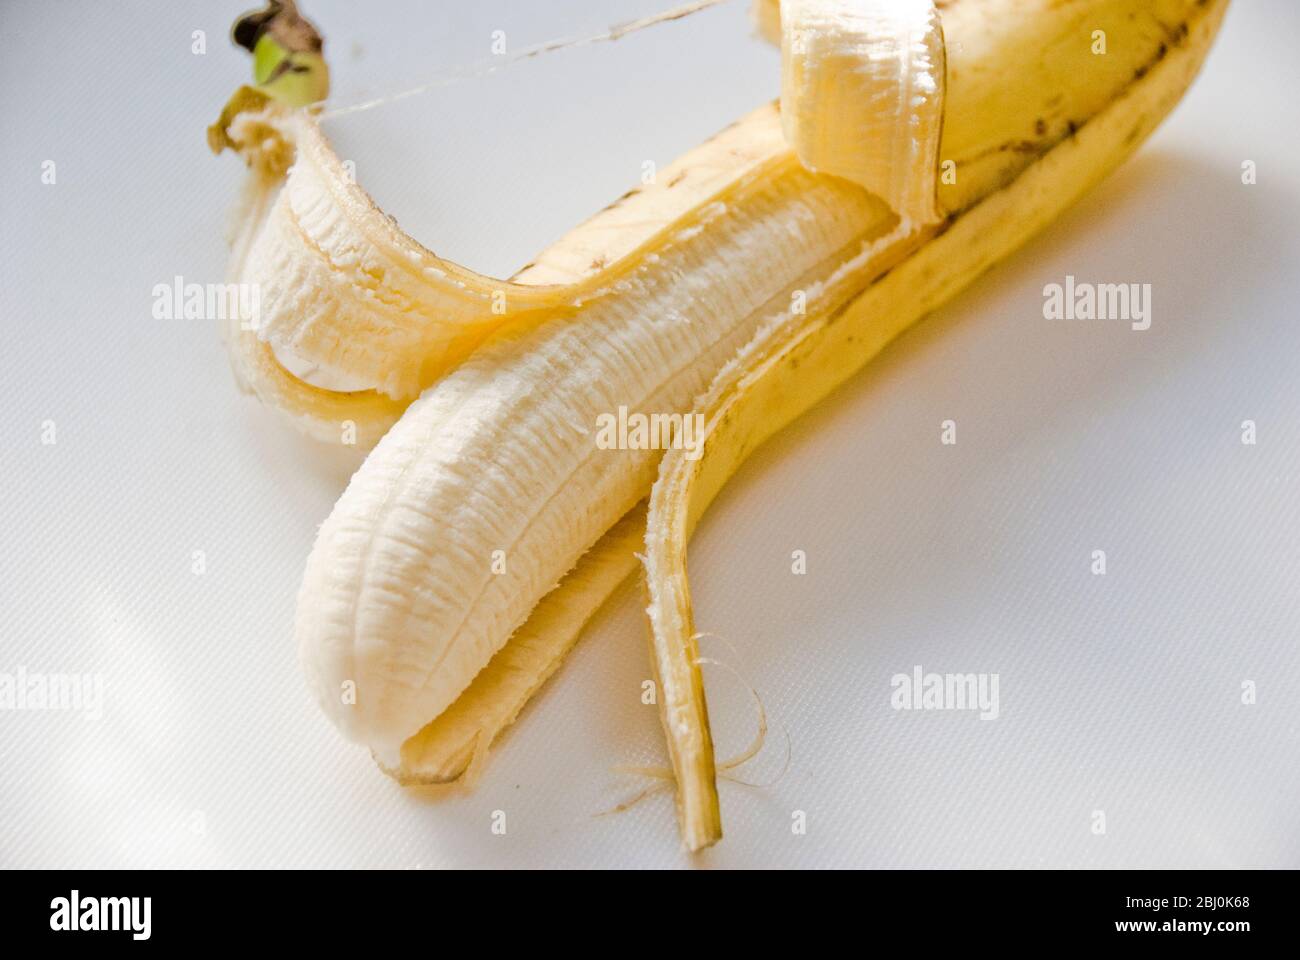 Half peeled banana on white surface - Stock Photo